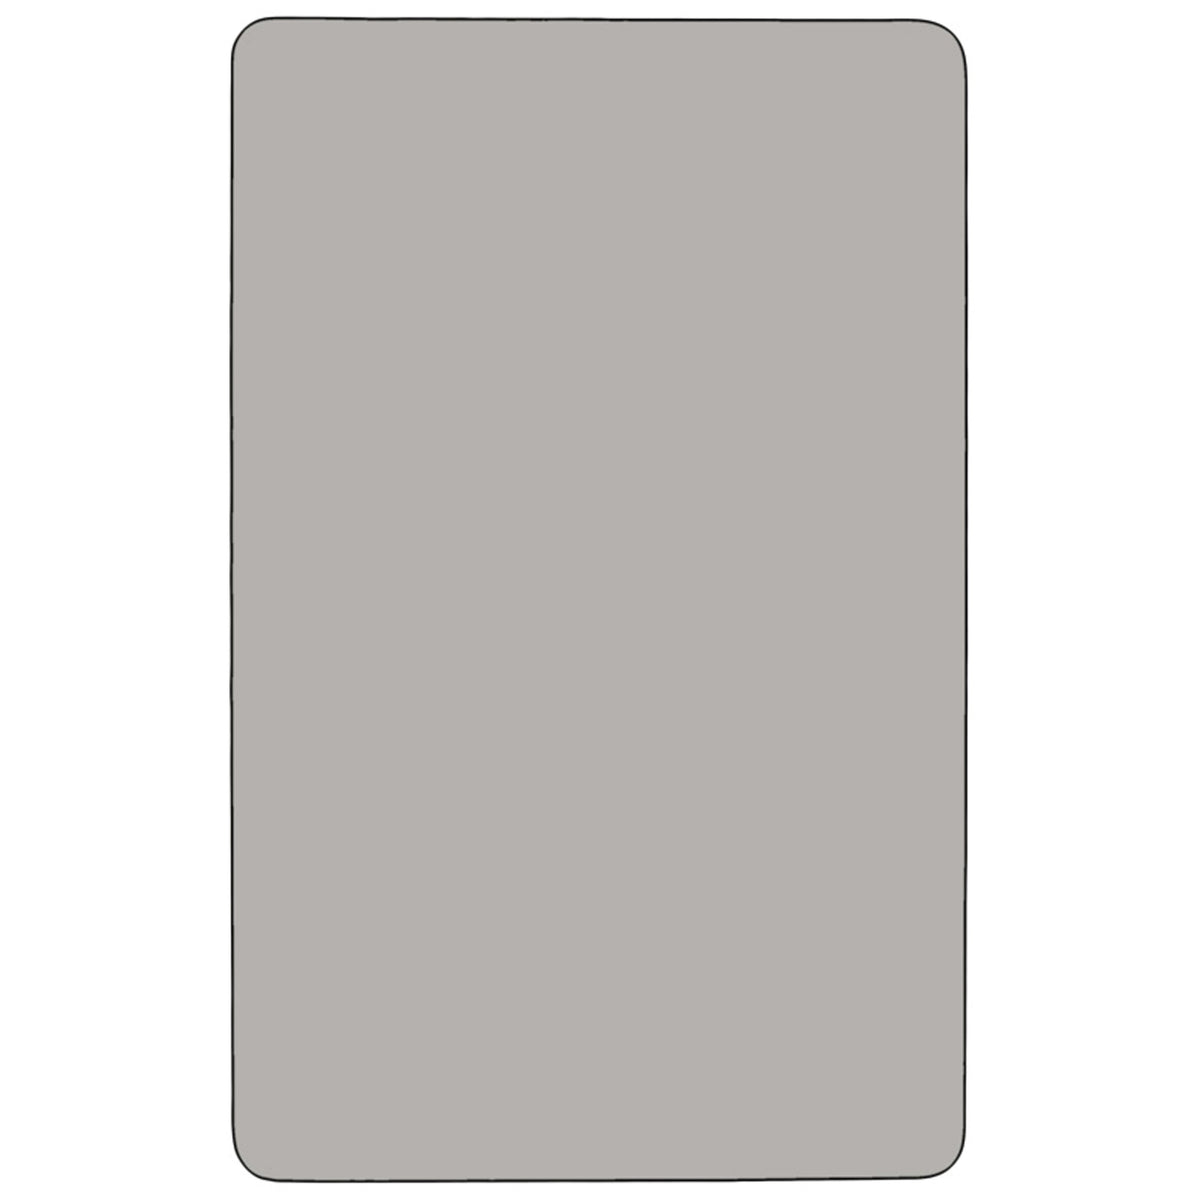 Gray |#| Mobile 30inchW x 72inchL Rectangular Grey HP Laminate Adjustable Activity Table